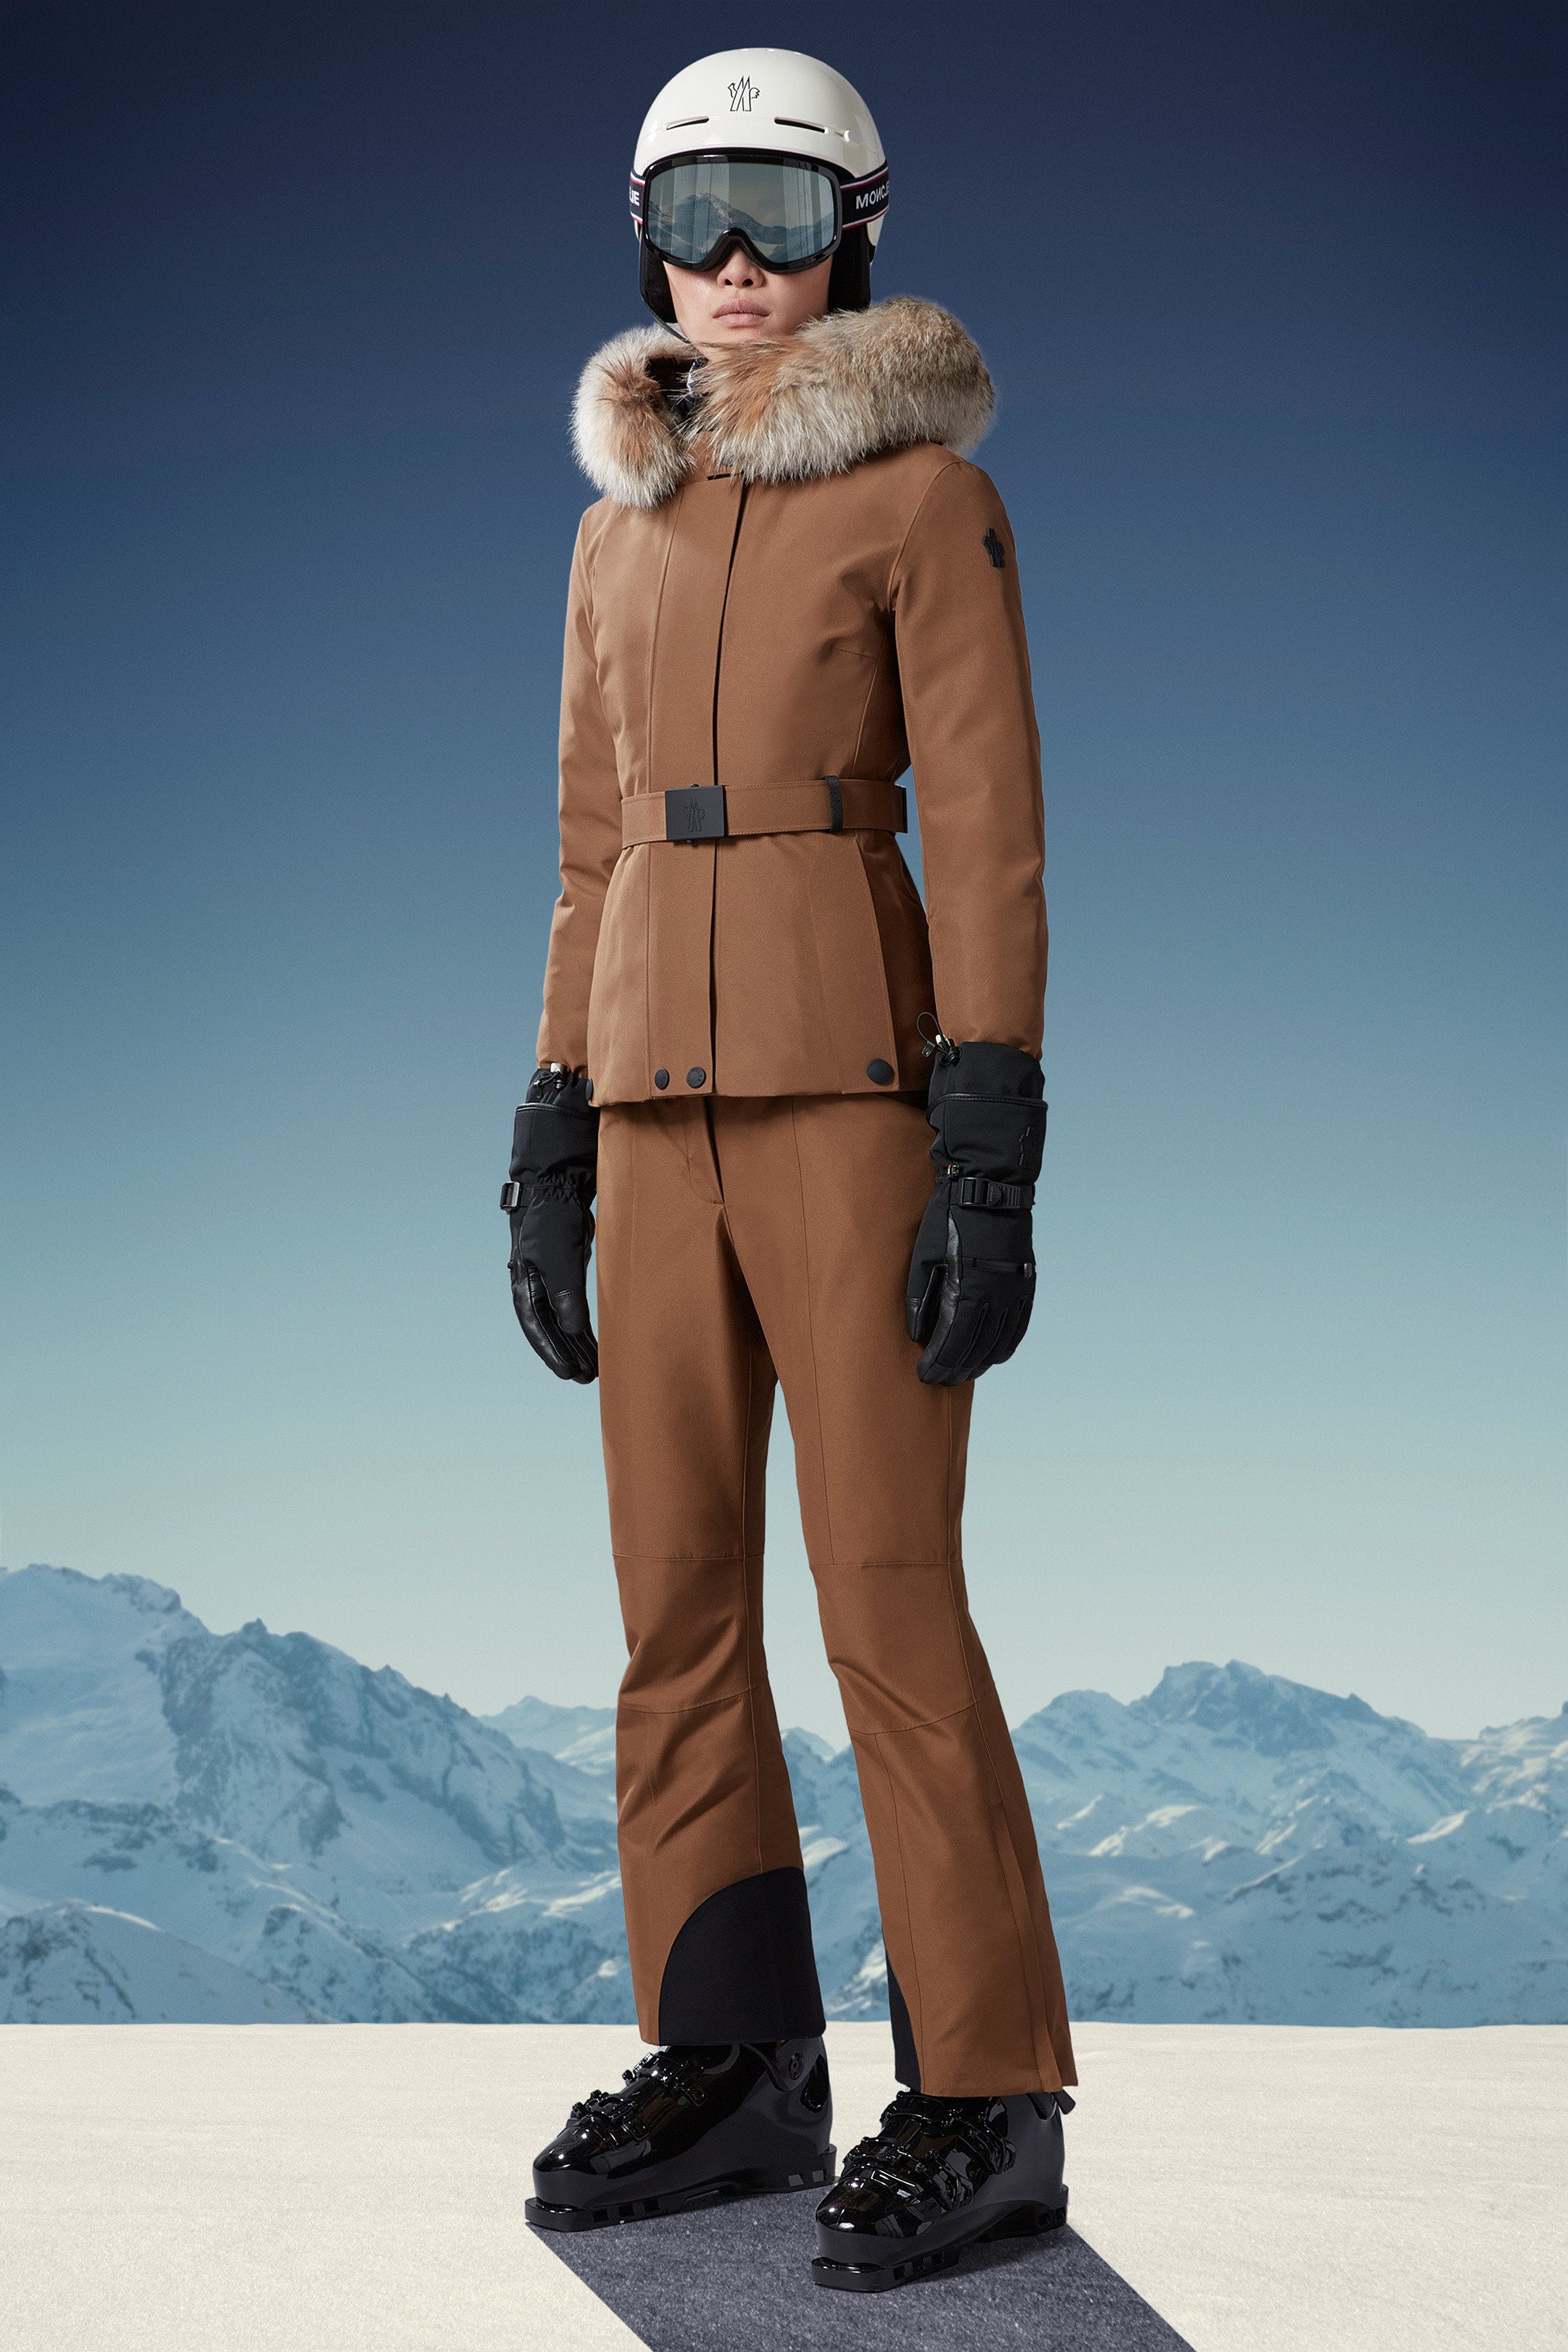 Ski Trousers, Ski Pants & Ski Suits for Women – Tagged size-xs